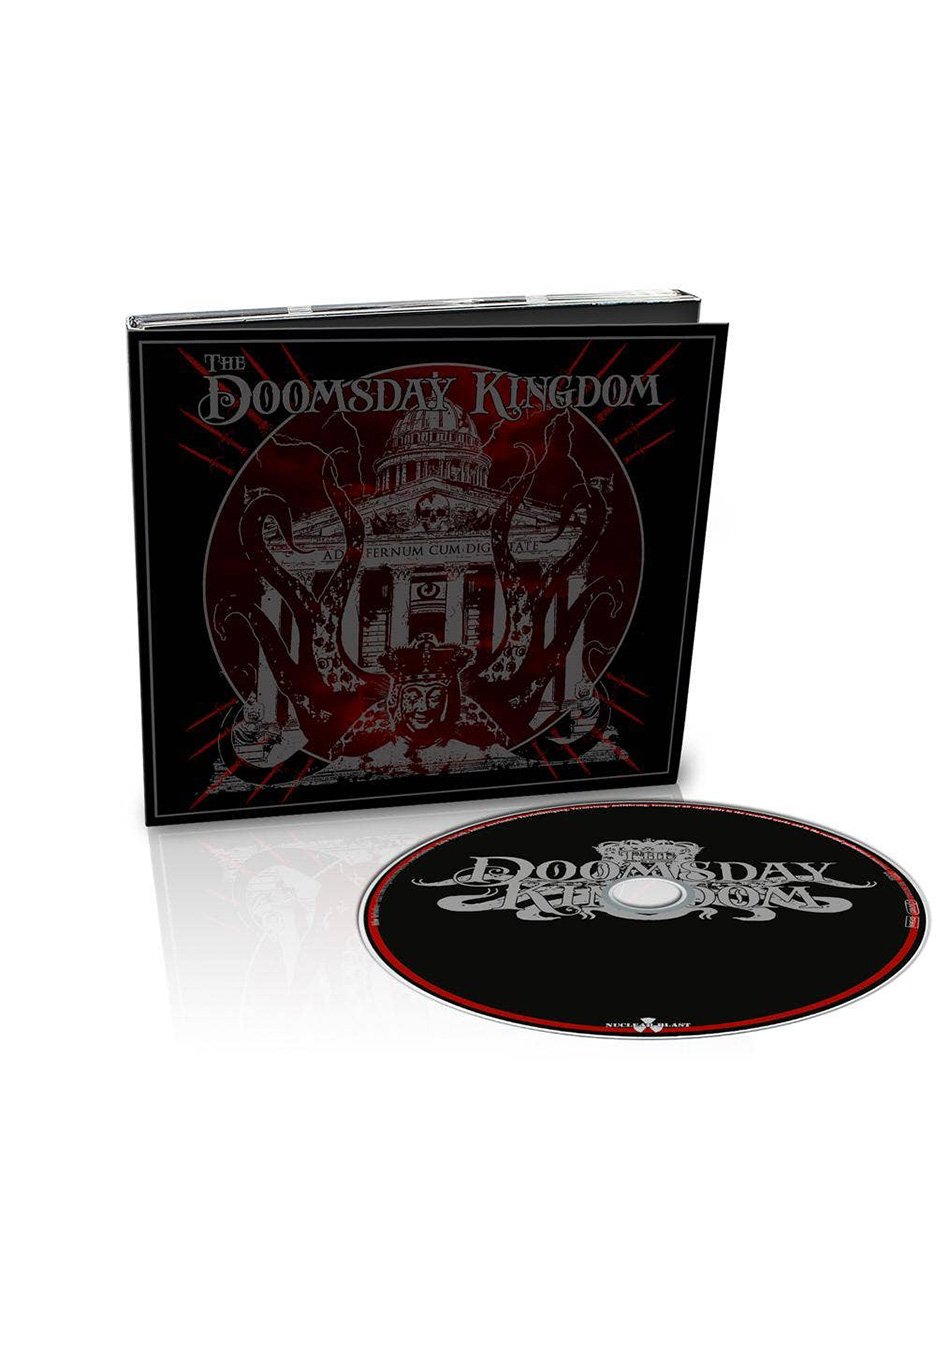 The Doomsday Kingdom - The Doomsday Kingdom - Digipak CD